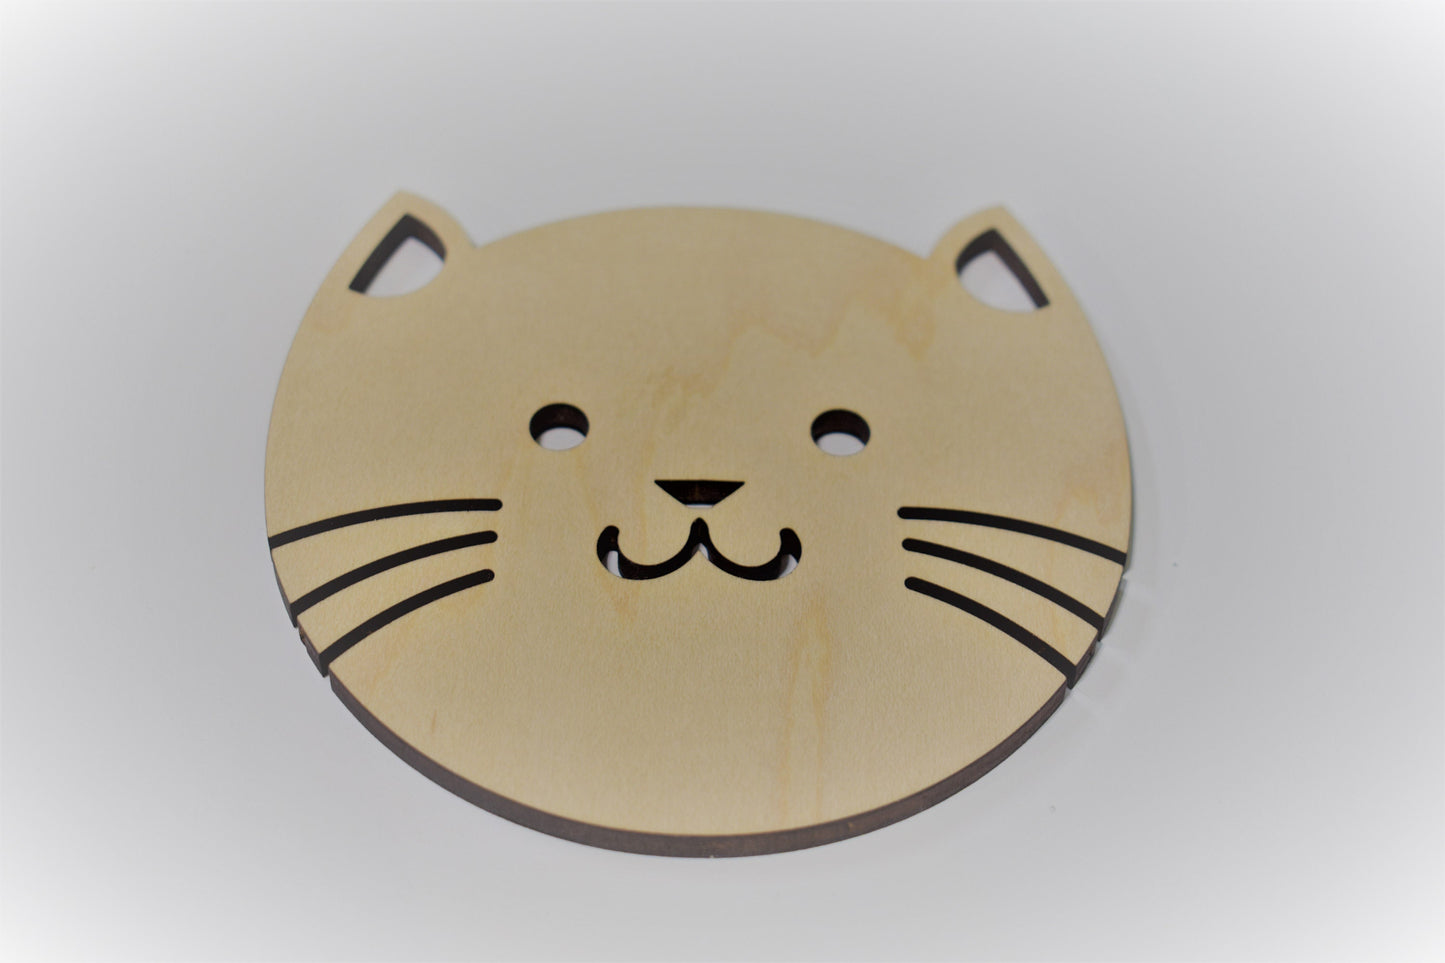 Cat Coasters, Gift for Cat Lovers, Cat Decor, Cat Stuff